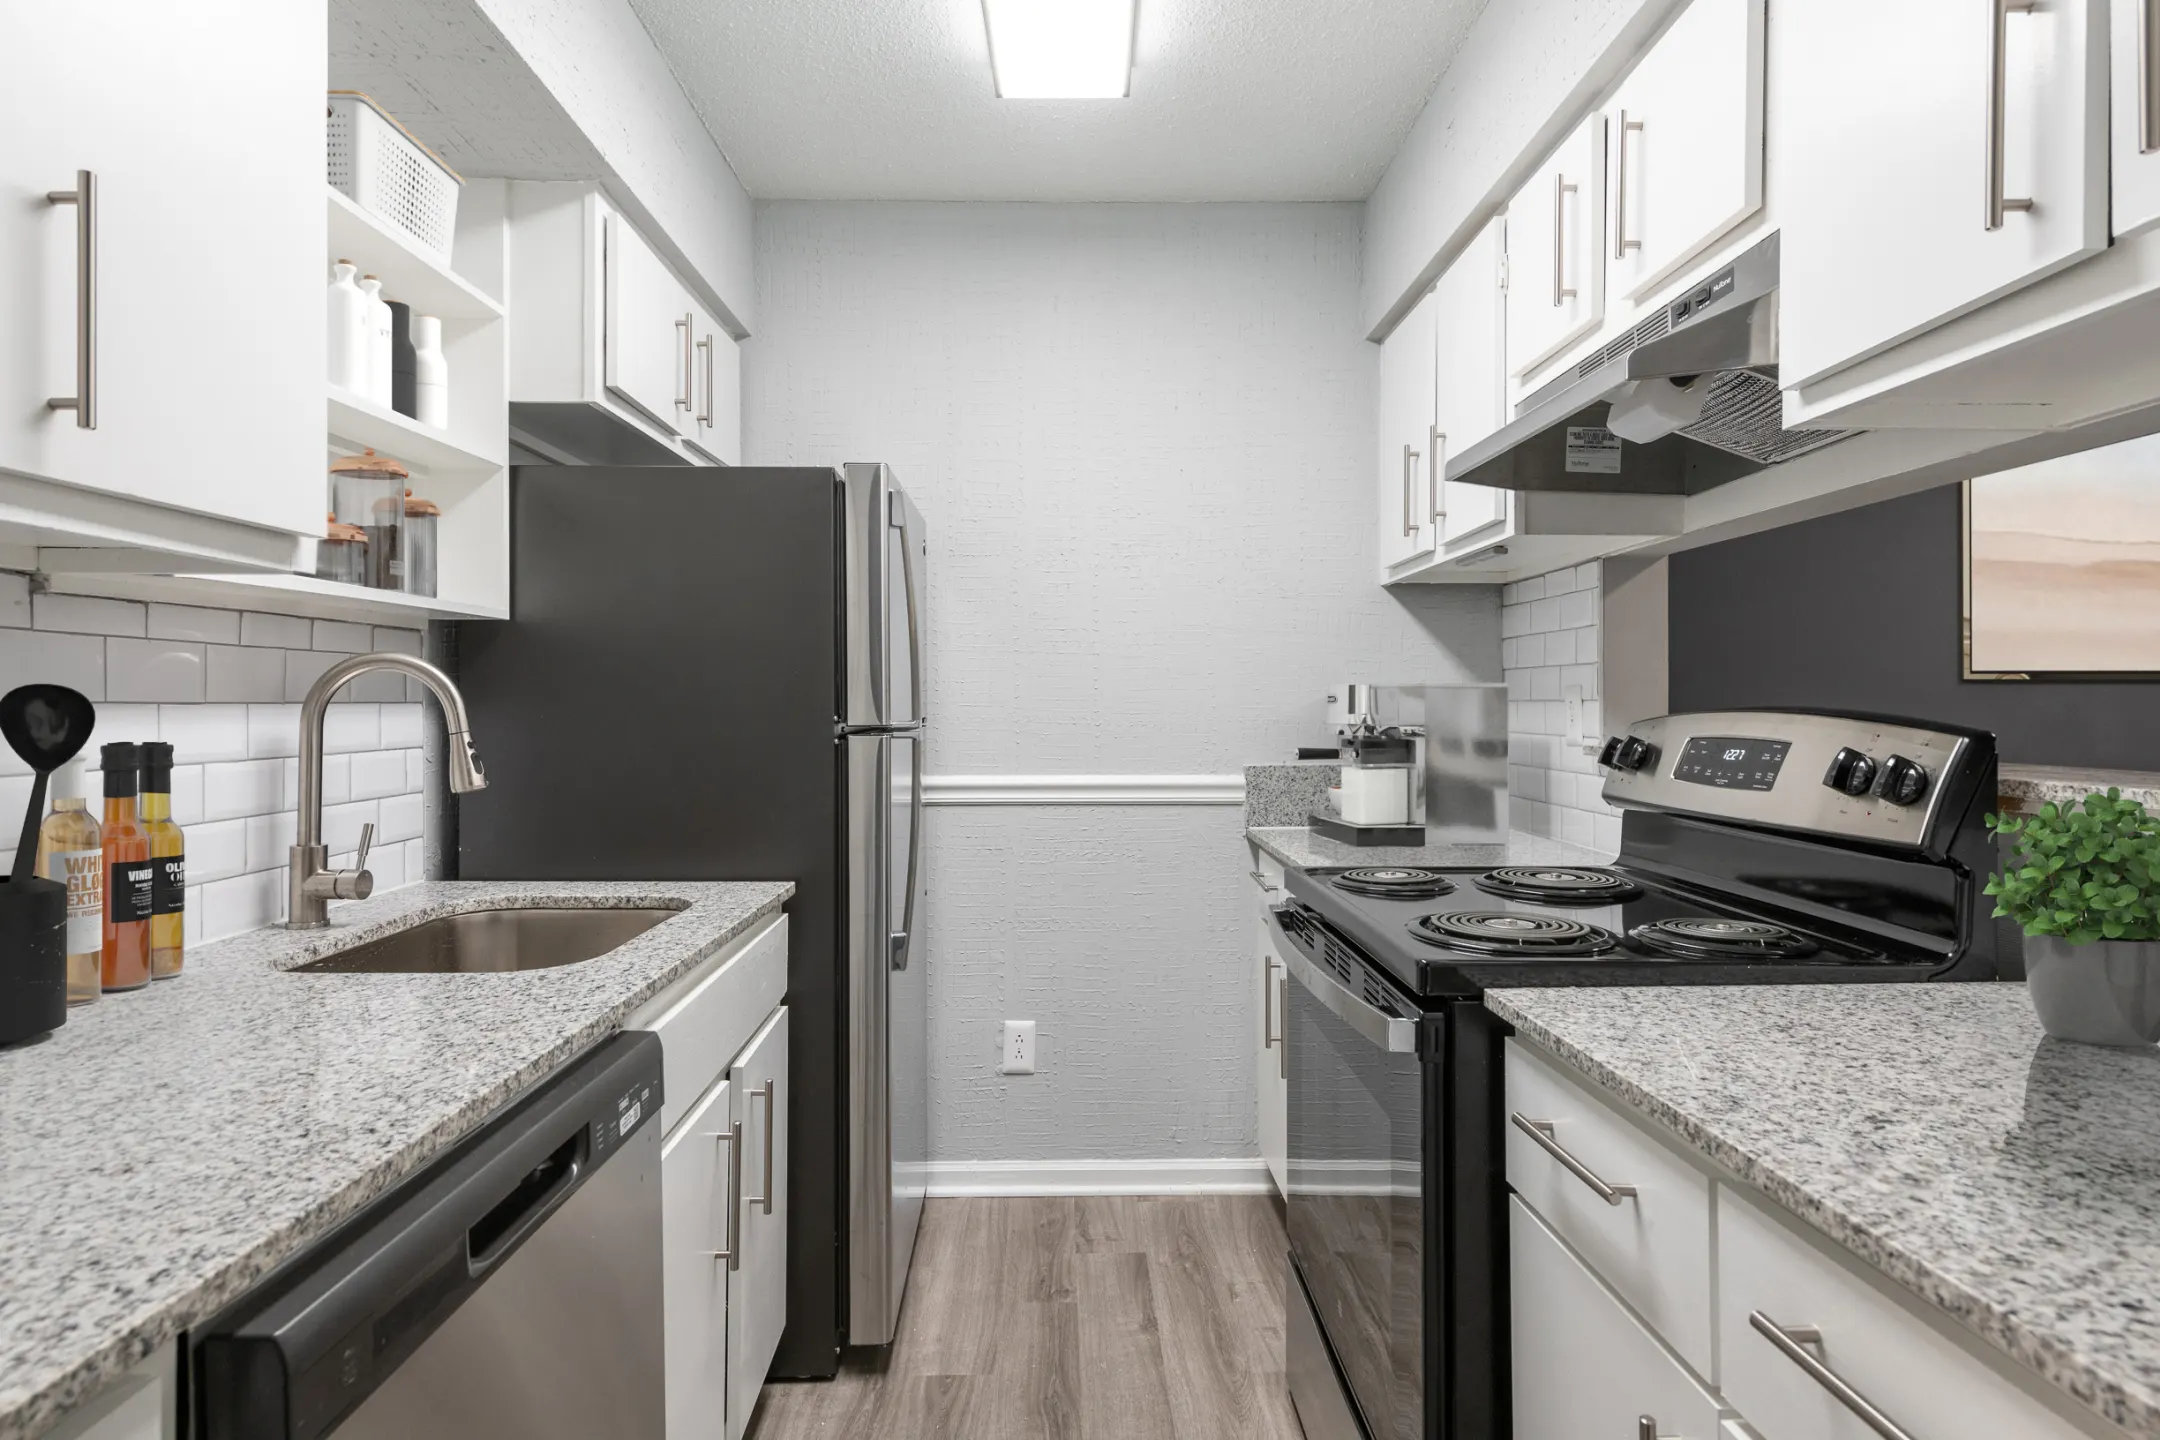 Kitchen - Edition Apartment Homes - Charlotte, NC